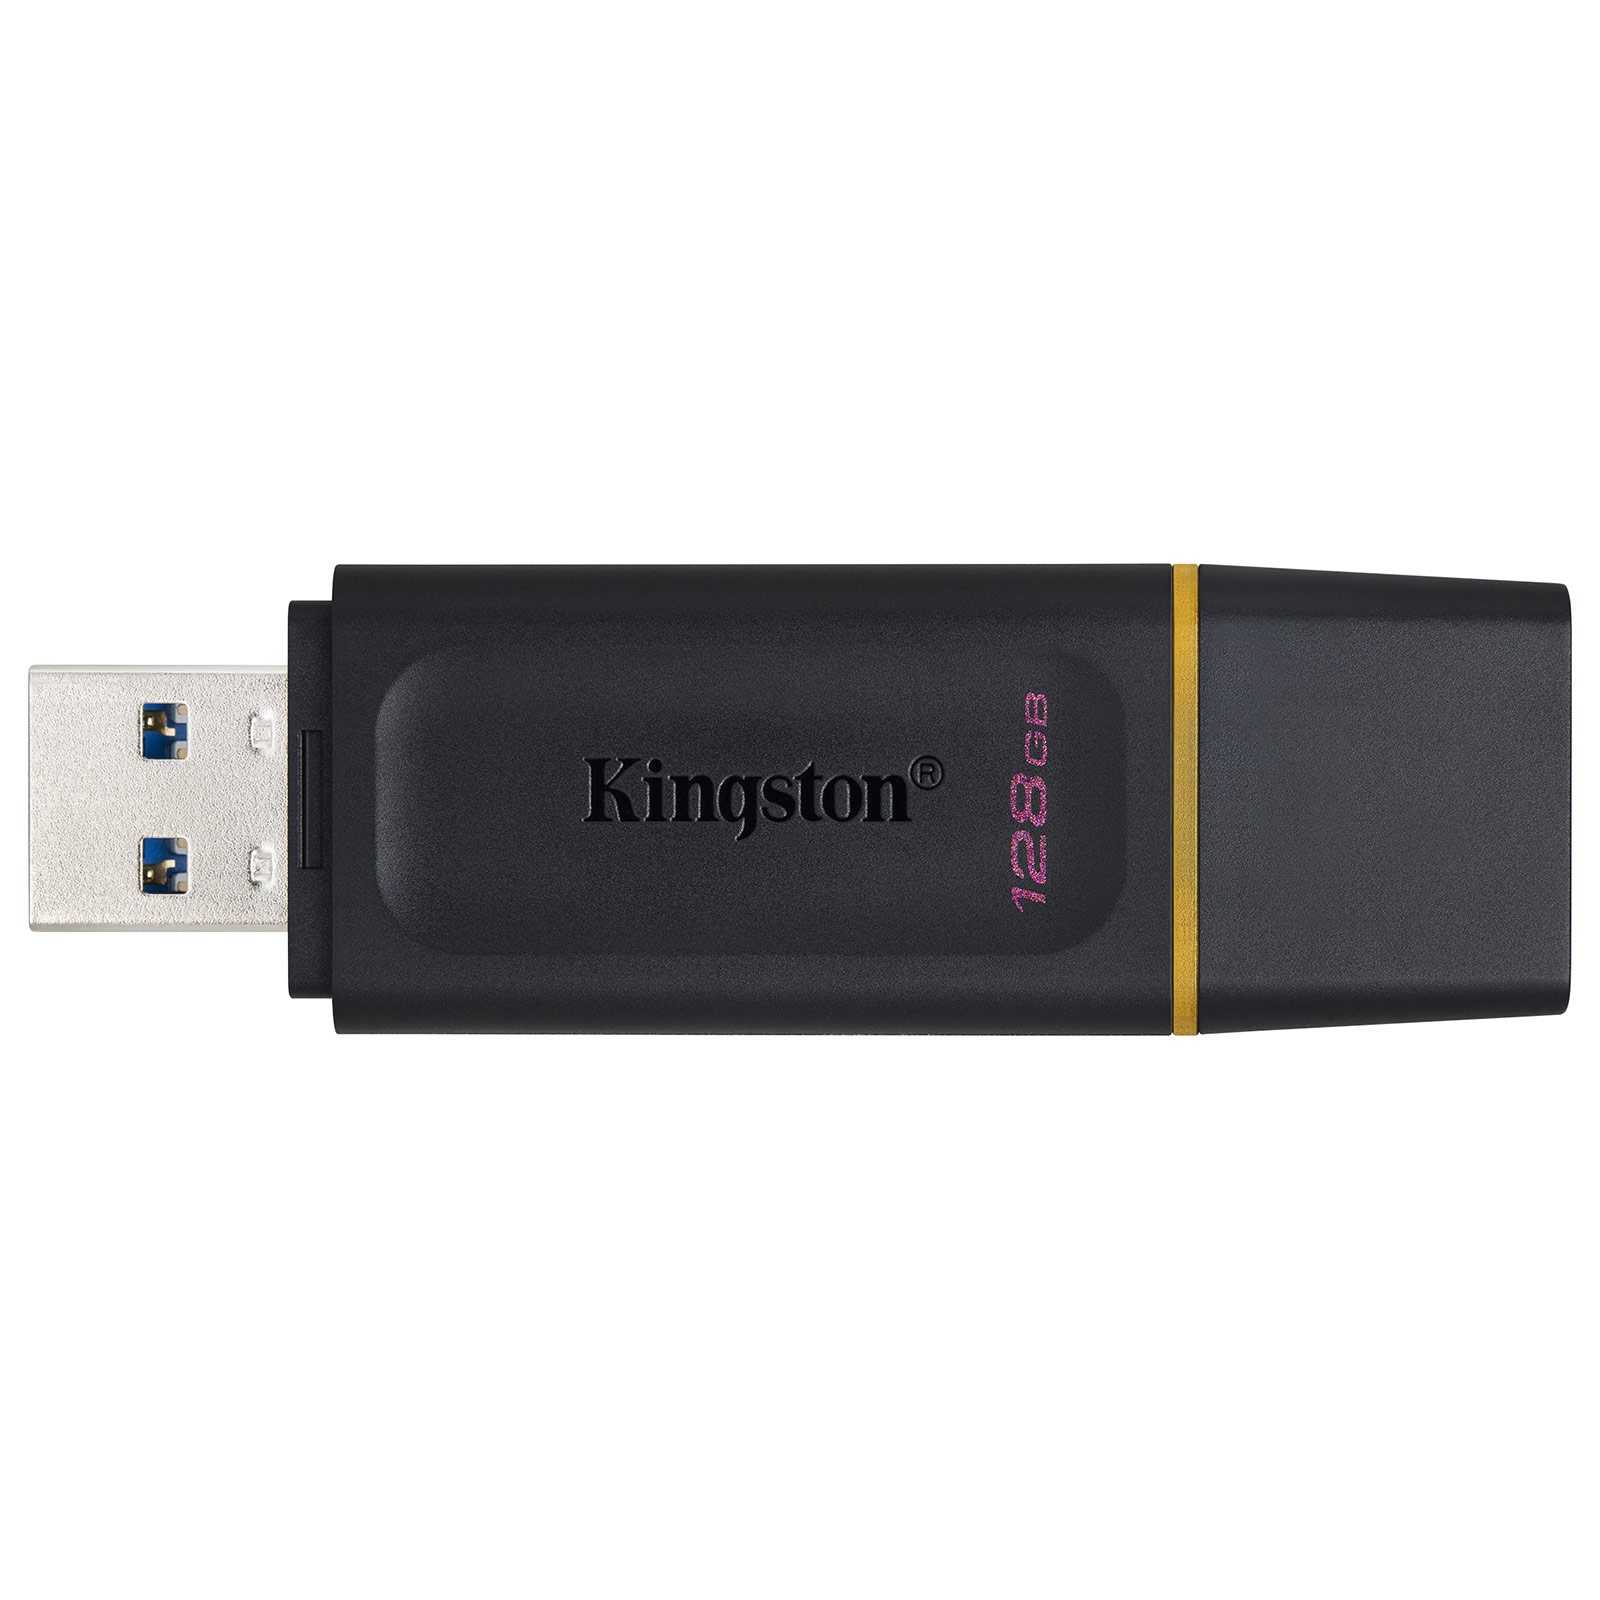 Kingston 128Go USB 3.2 DataTraveler - Clé USB Kingston - 2